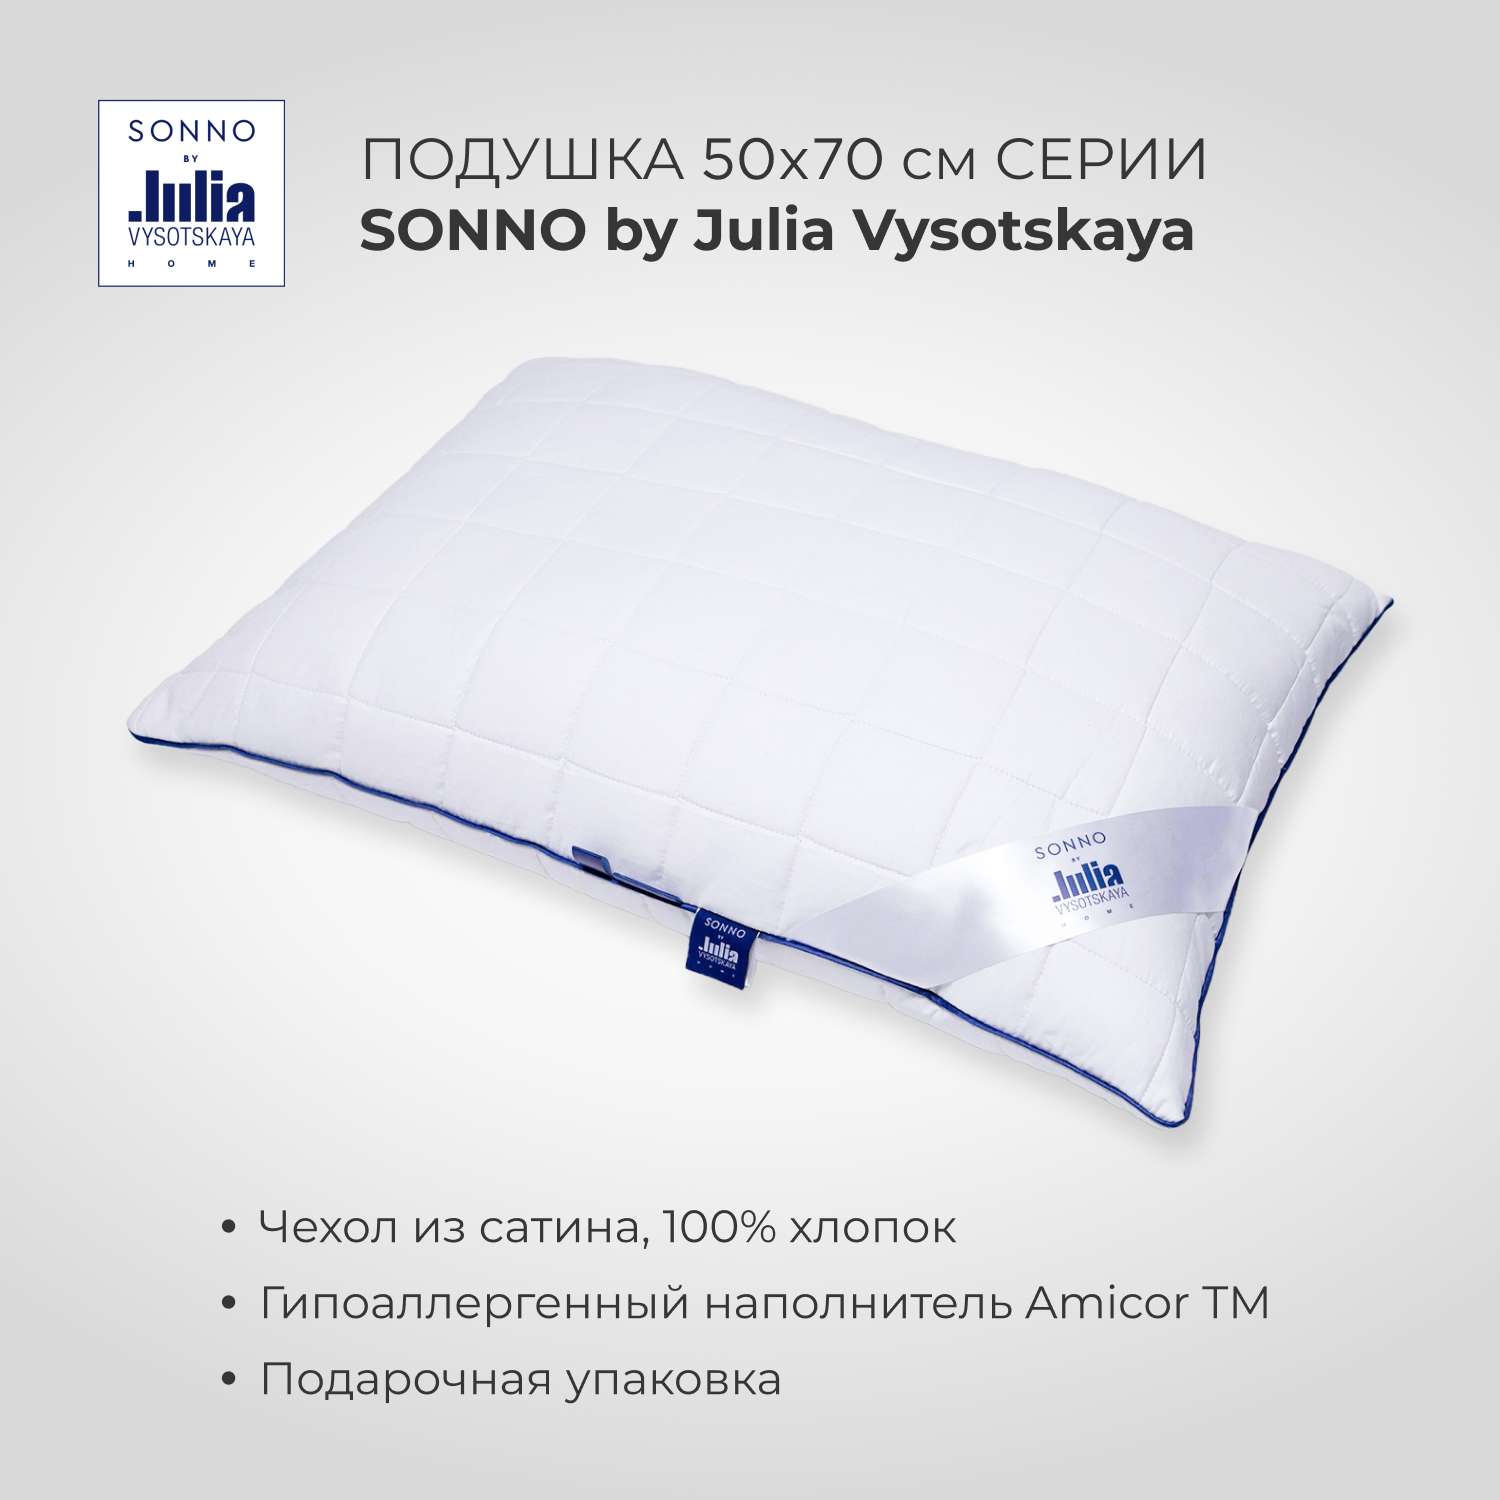 Подушка для сна SONNO by Julia Vysotskaya 50x70 Amicor TM - фото 2